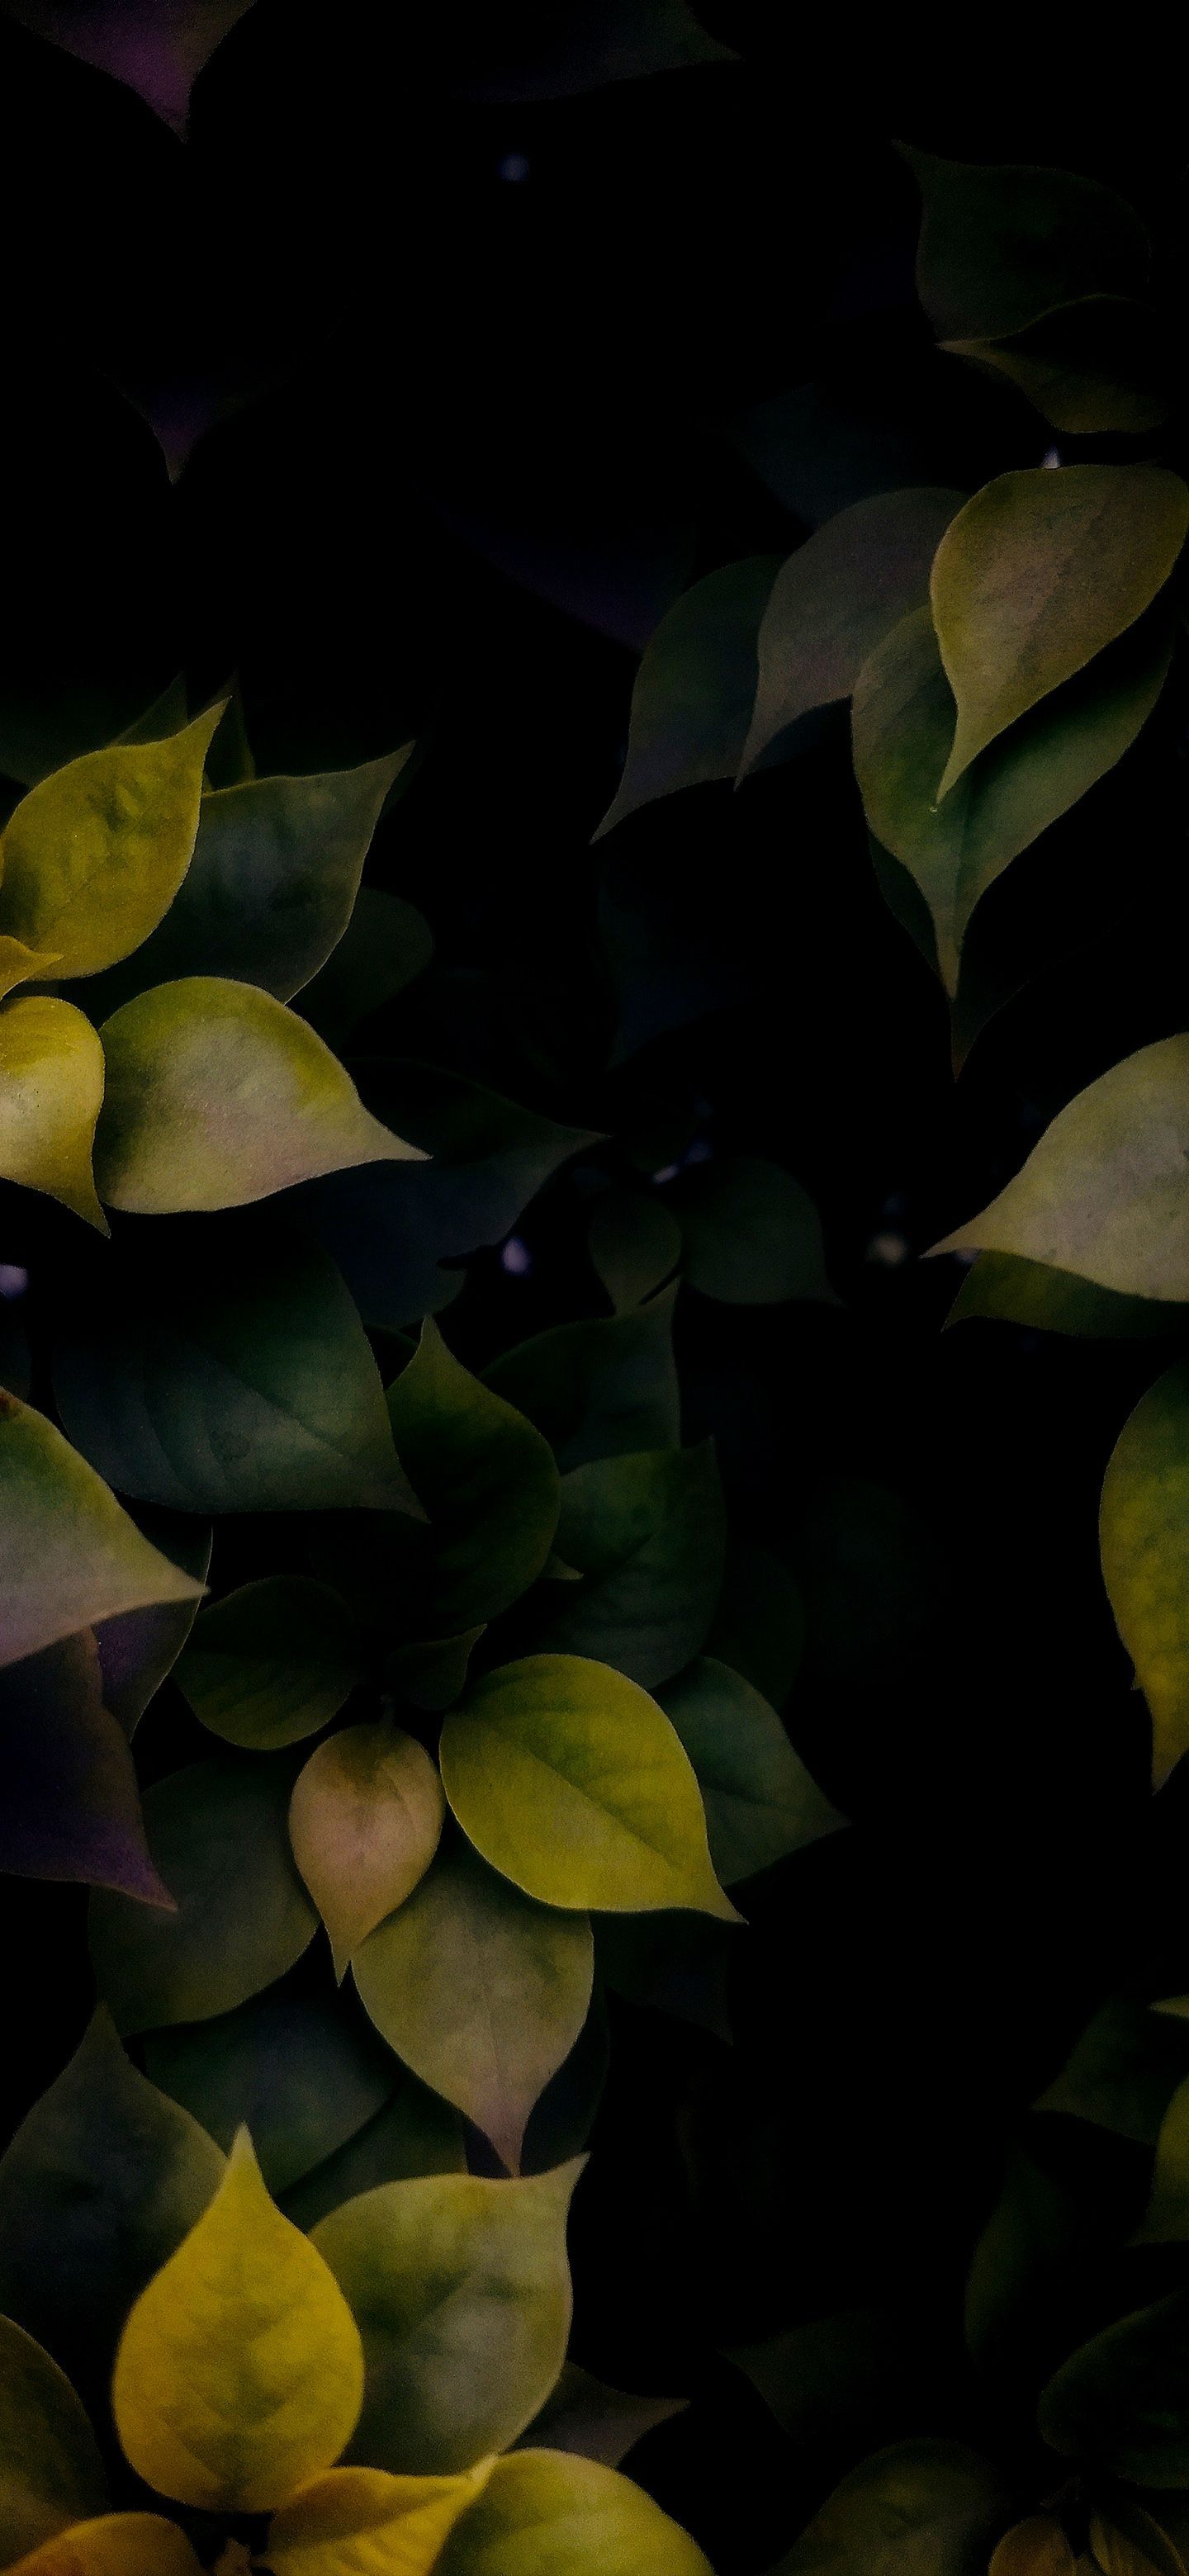 Leaves in Dark. Ipod wallpaper, Wallpaper, Plant leaves